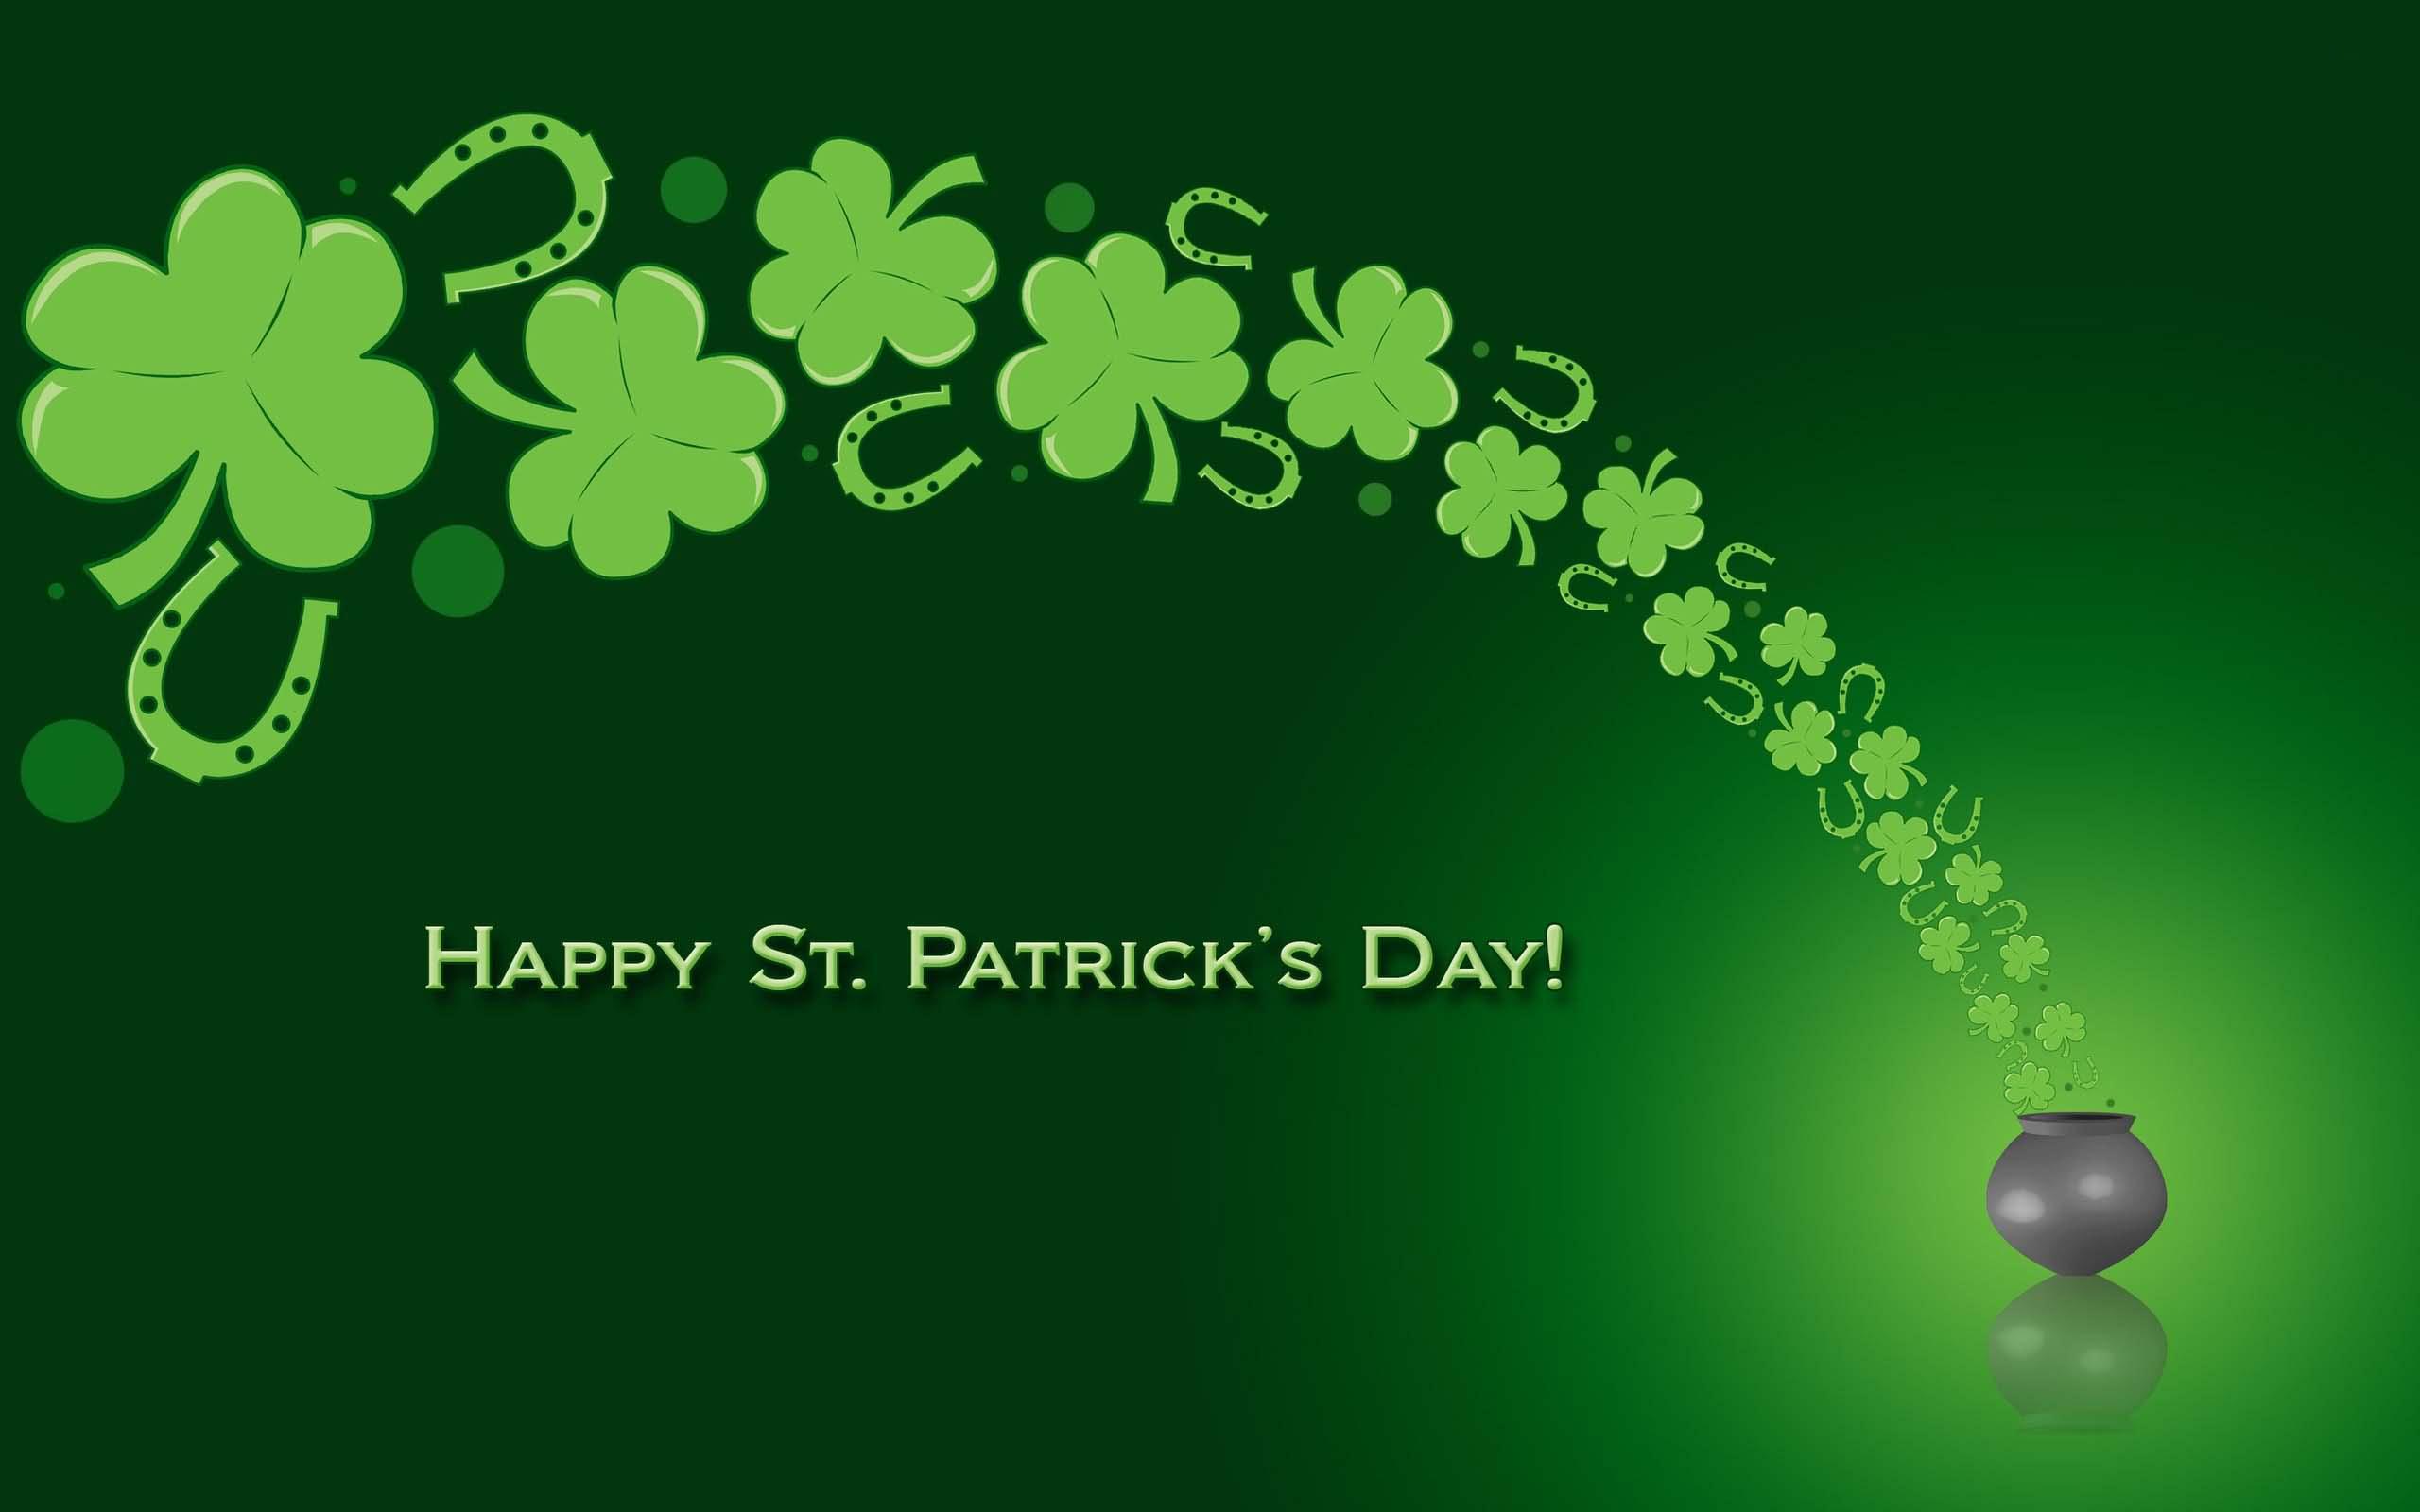 Happy Saint Patrick's Day HD Wallpaper Image